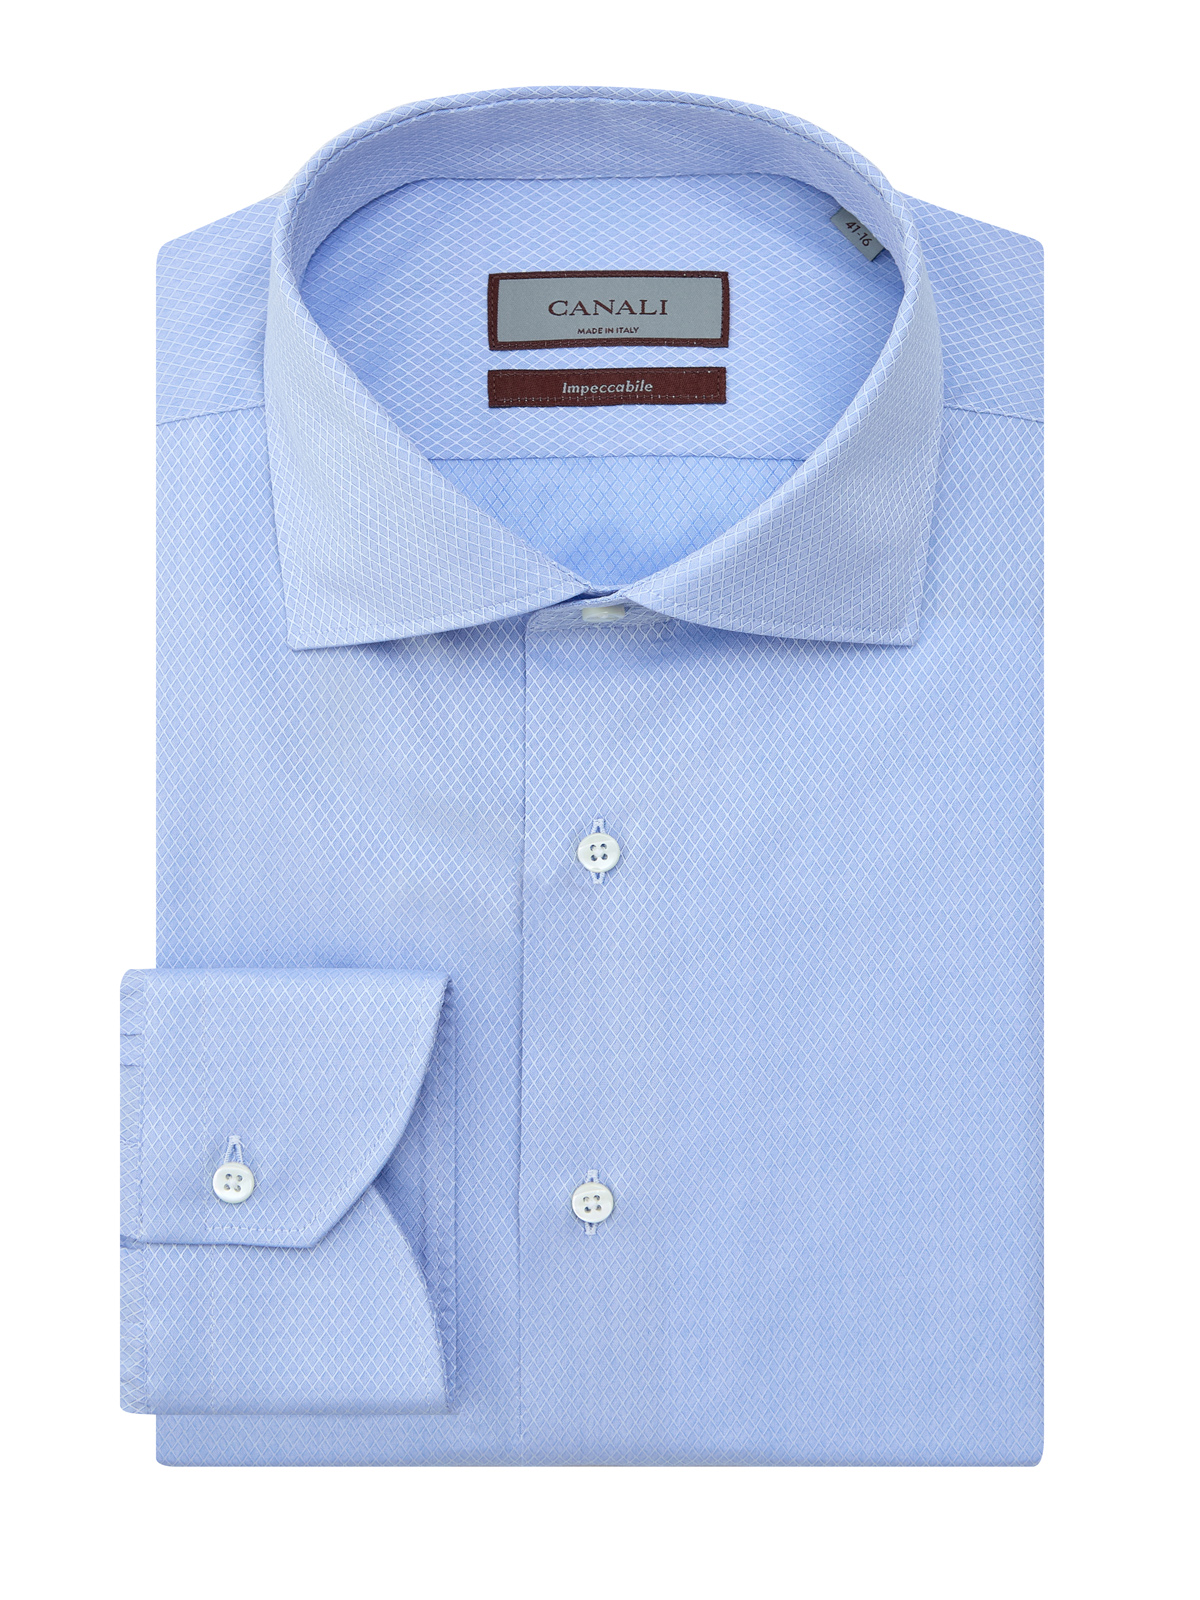 Рубашка из гладкого хлопка Impeccabile с ромбовидным узором CANALI голубого цвета